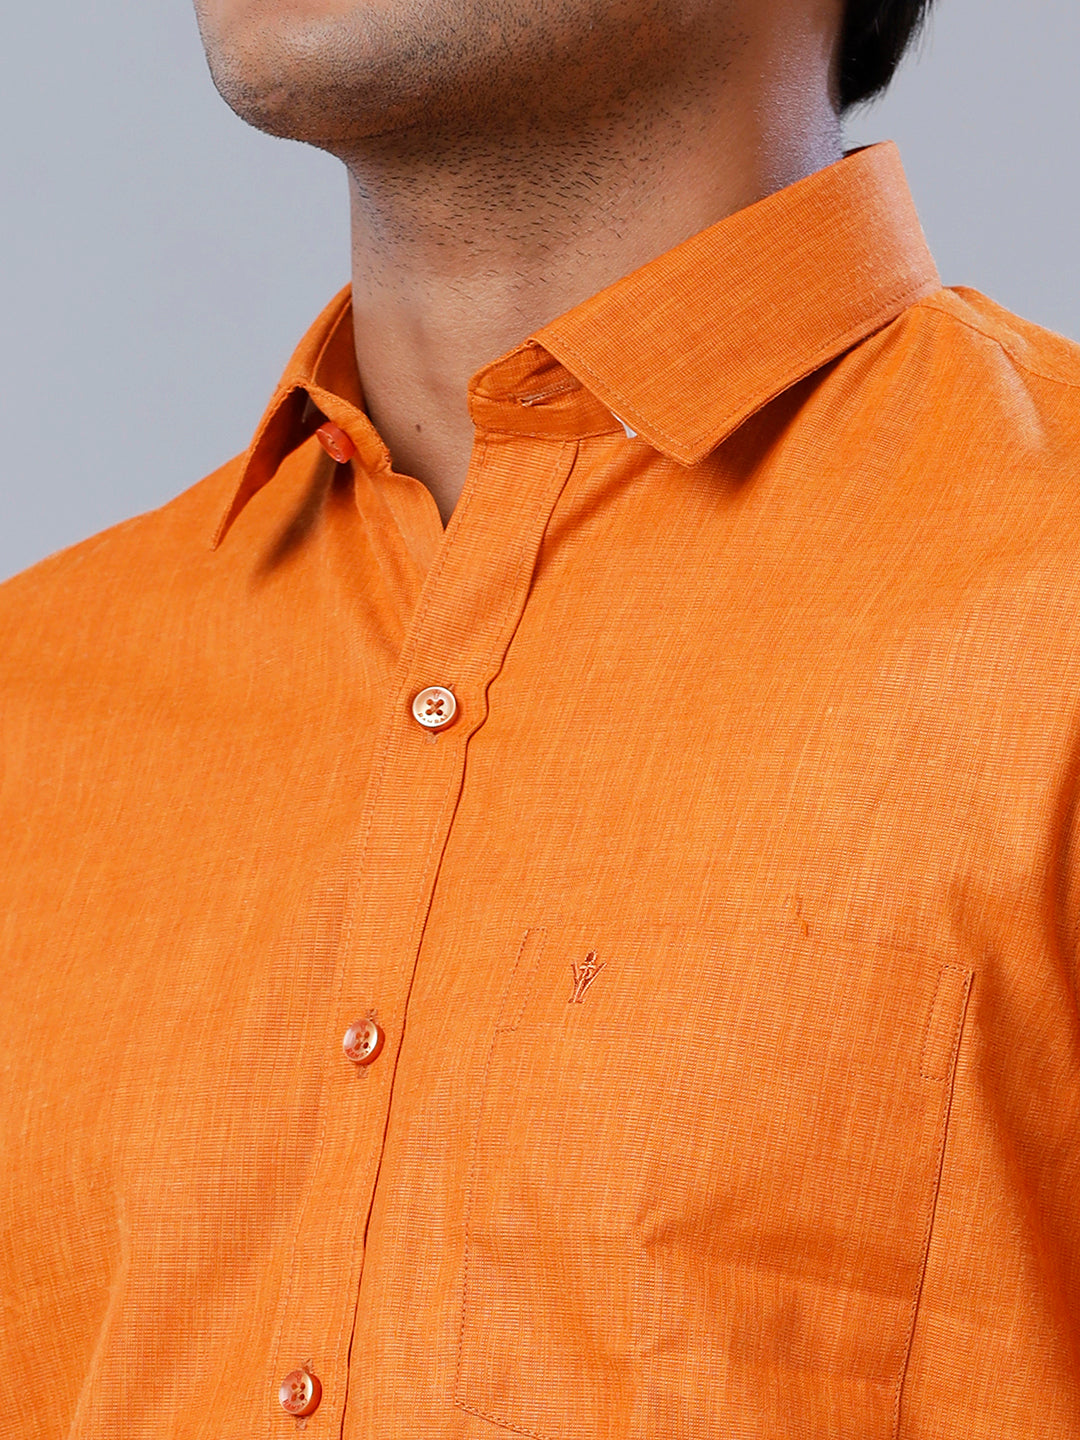 Mens Formal Shirt Half Sleeves Saffron T40 TP7-Zoom view